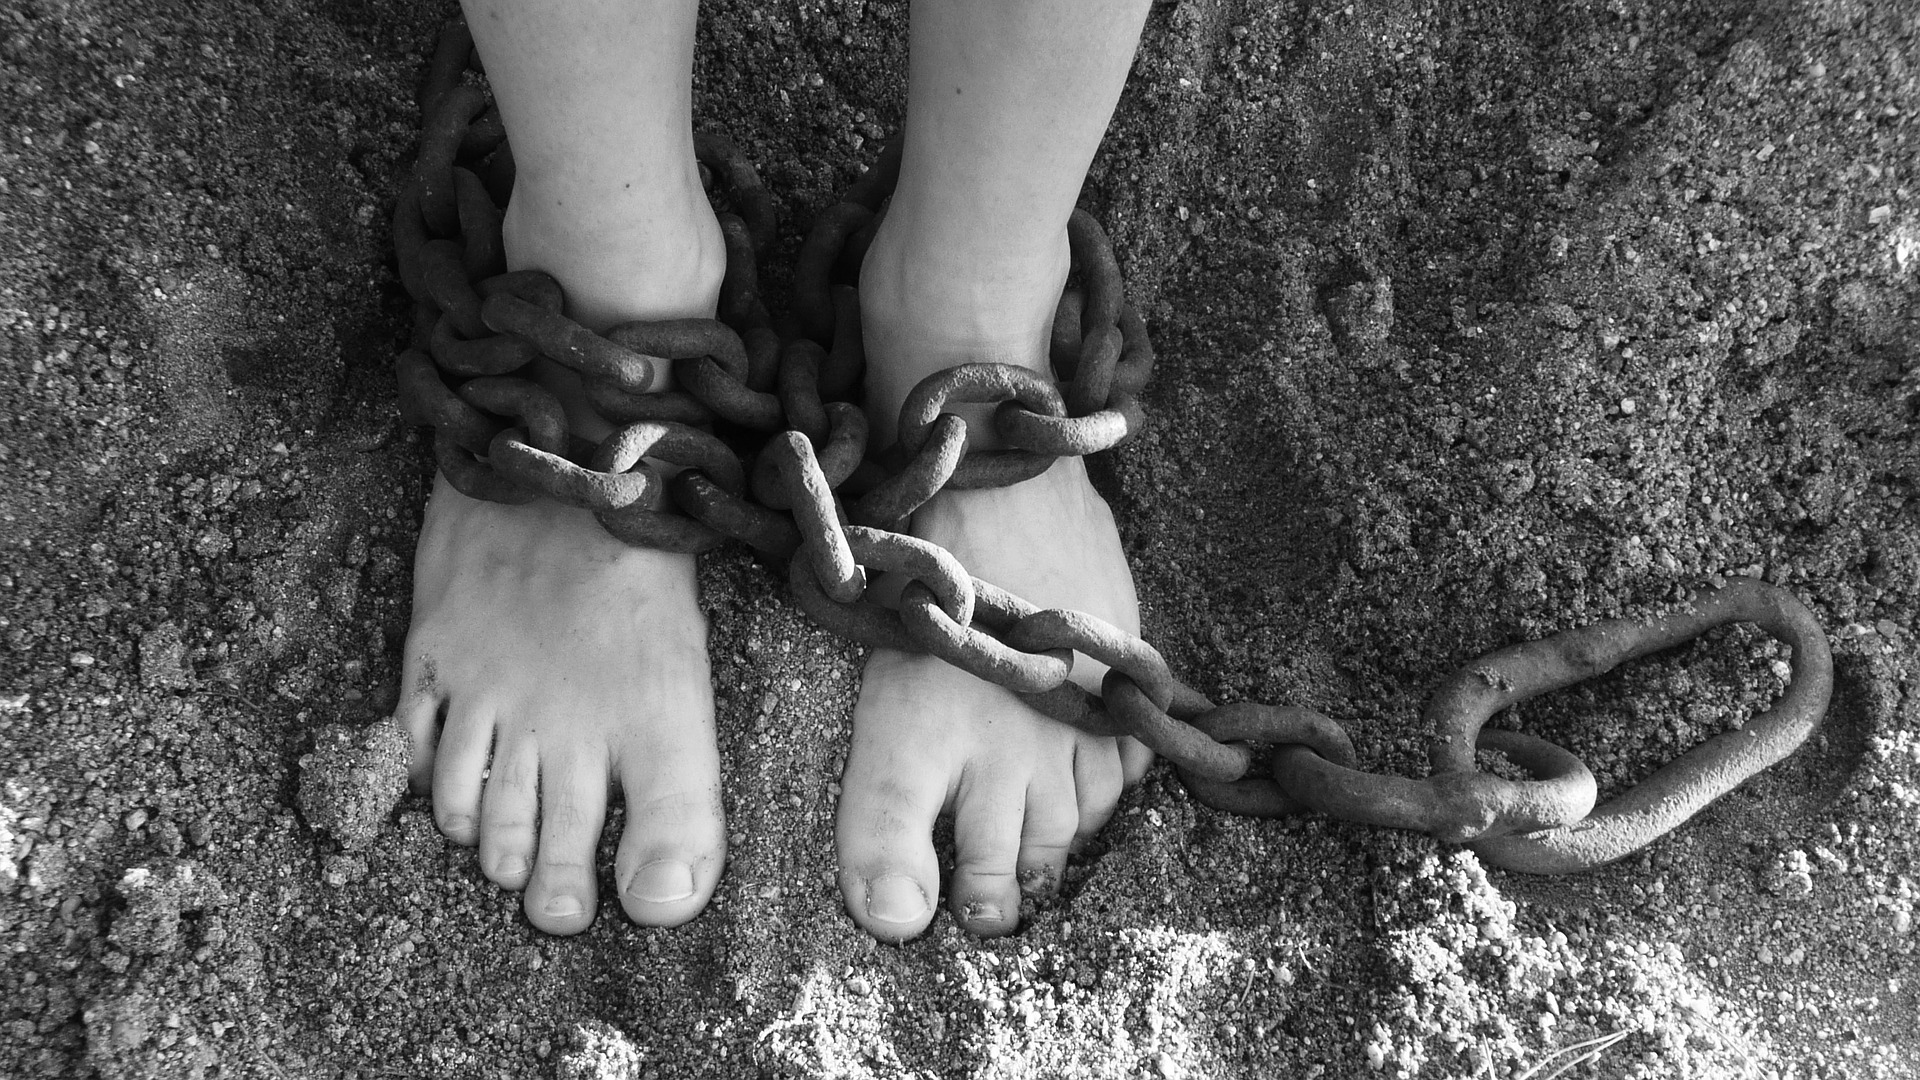 Slavery with chains around feet, bondage